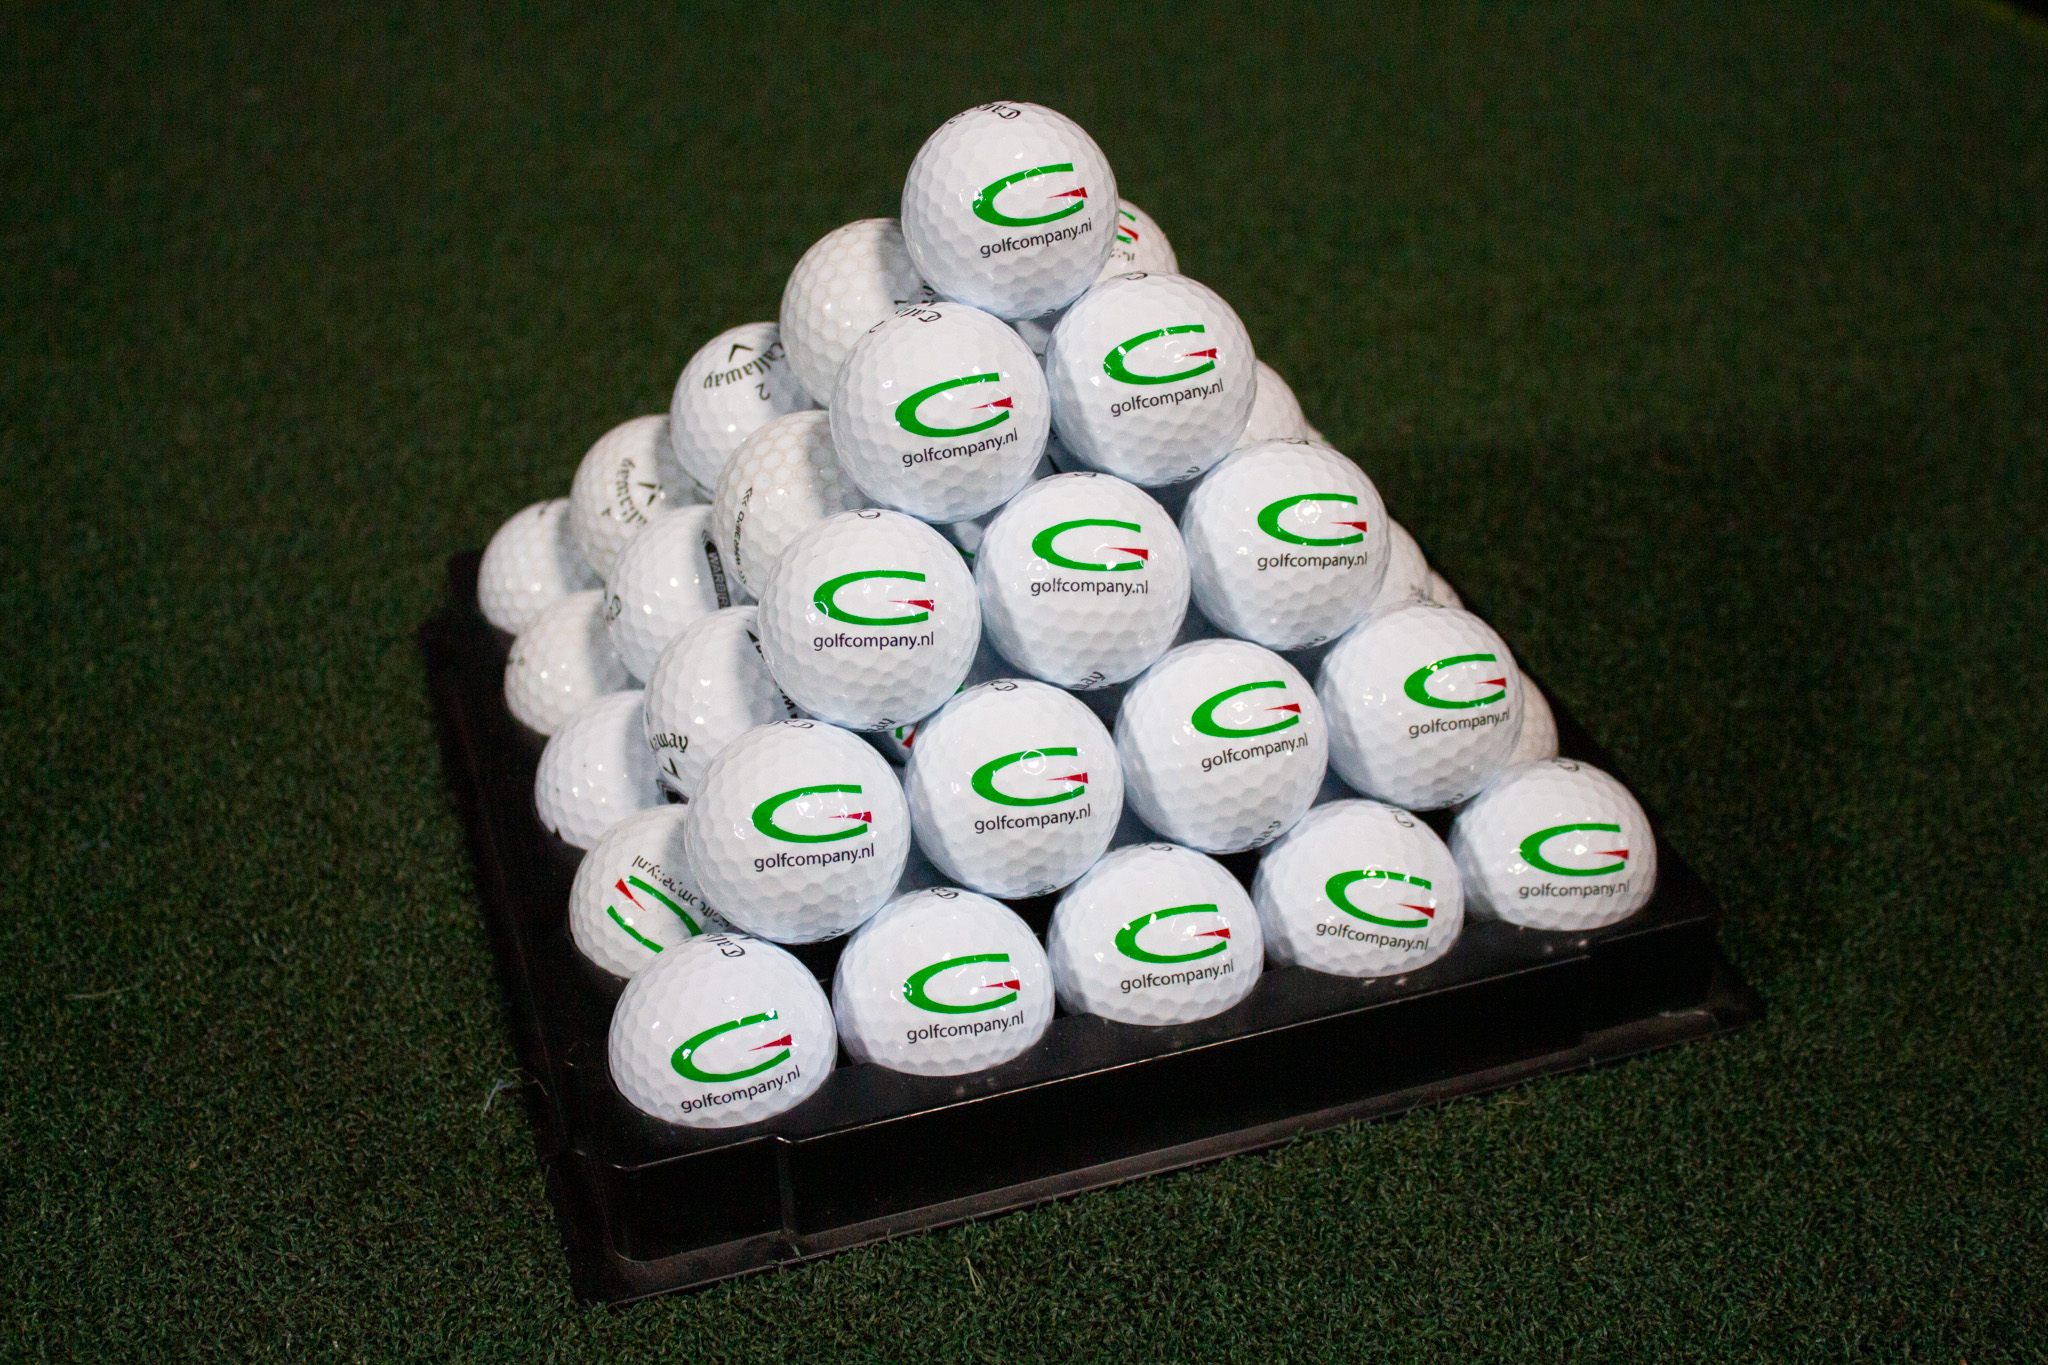 stapel golfballen liggende foto met logo golf company op iedere bal